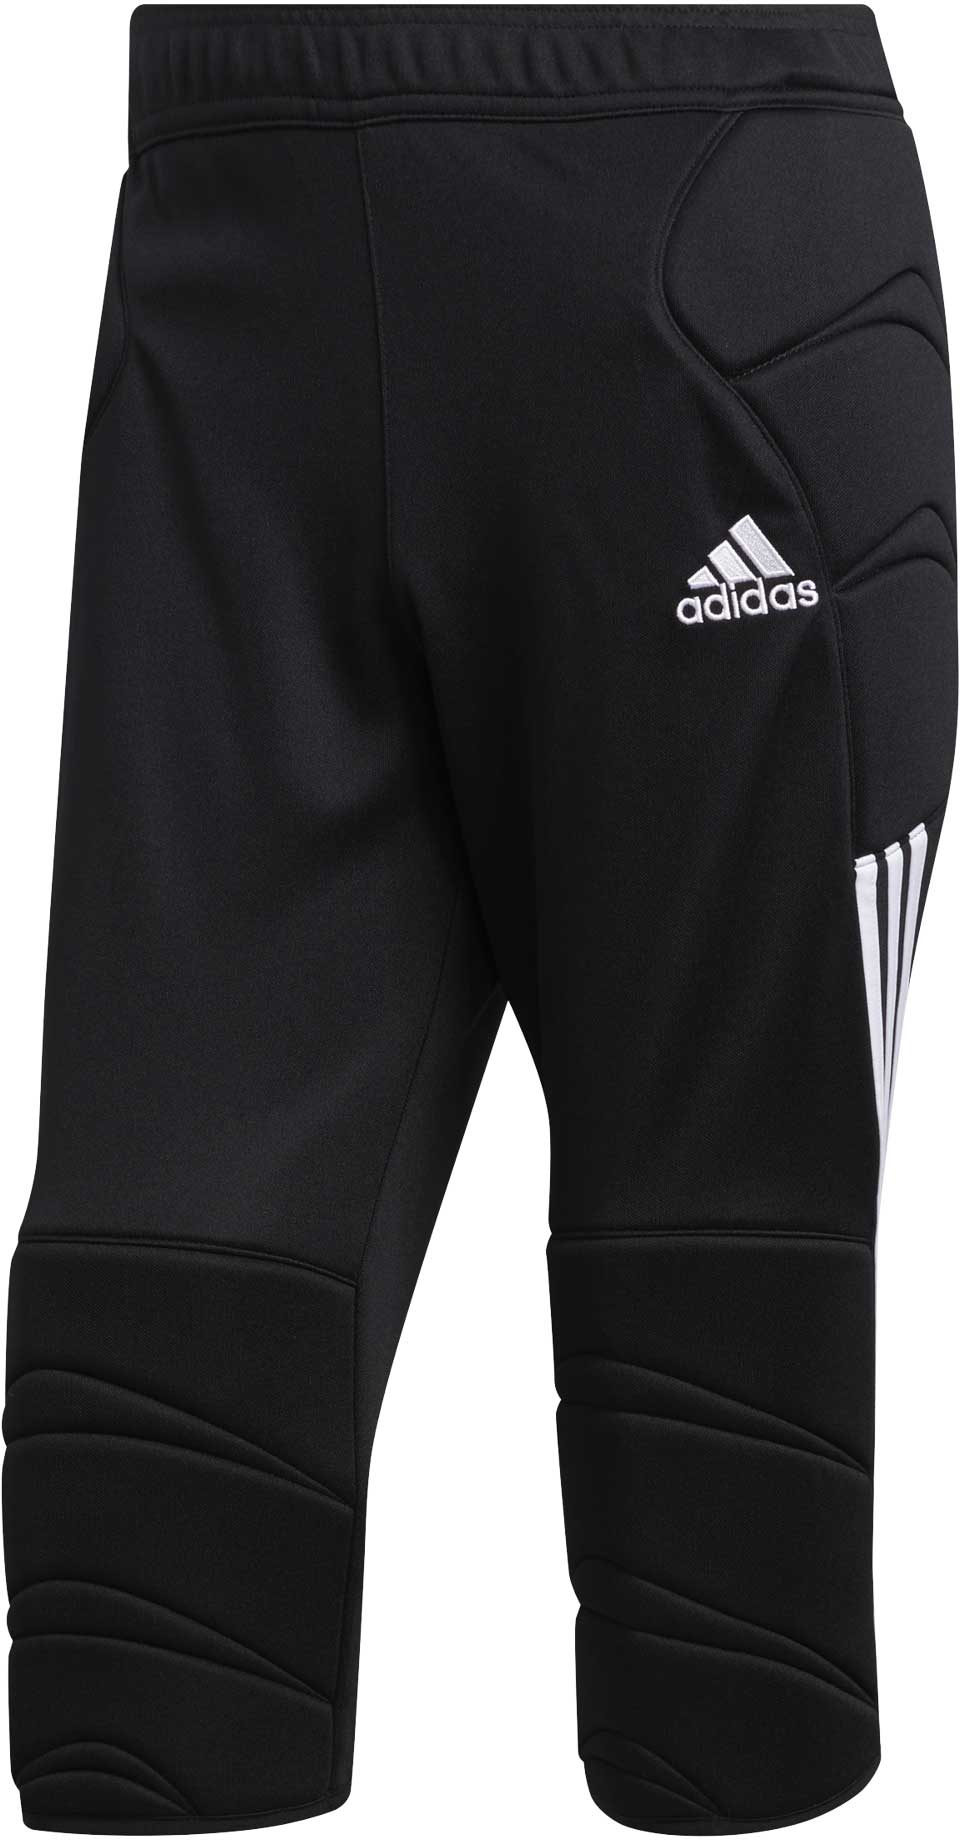 Men’s 3/4 length goalkeeper pants